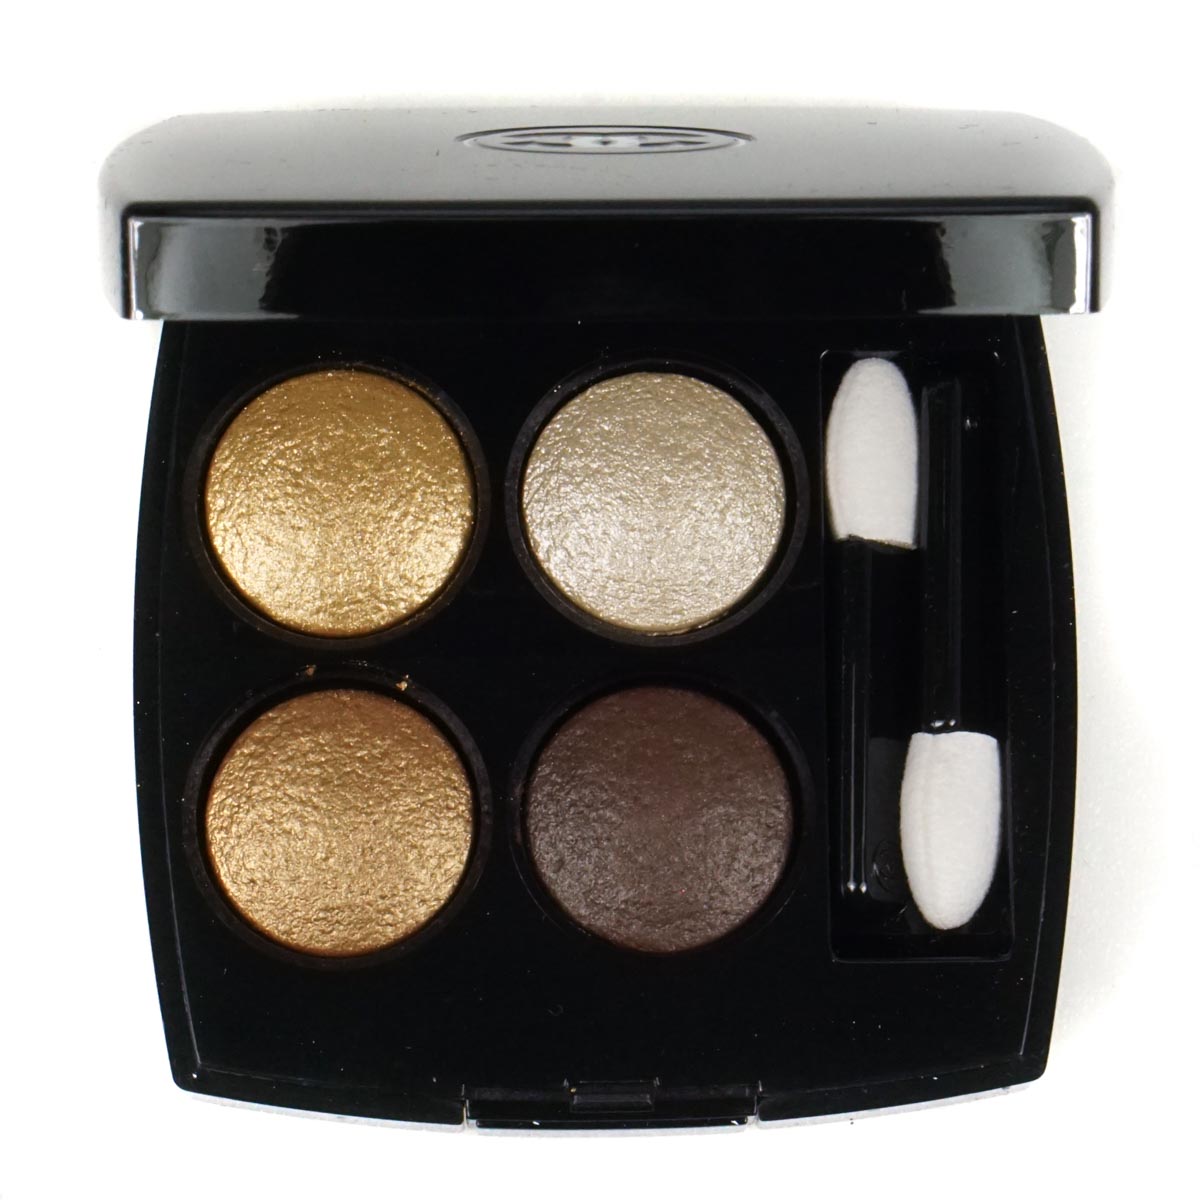 Chanel Les 4 Ombres Eyeshadow Palette 274 Codes Elegants